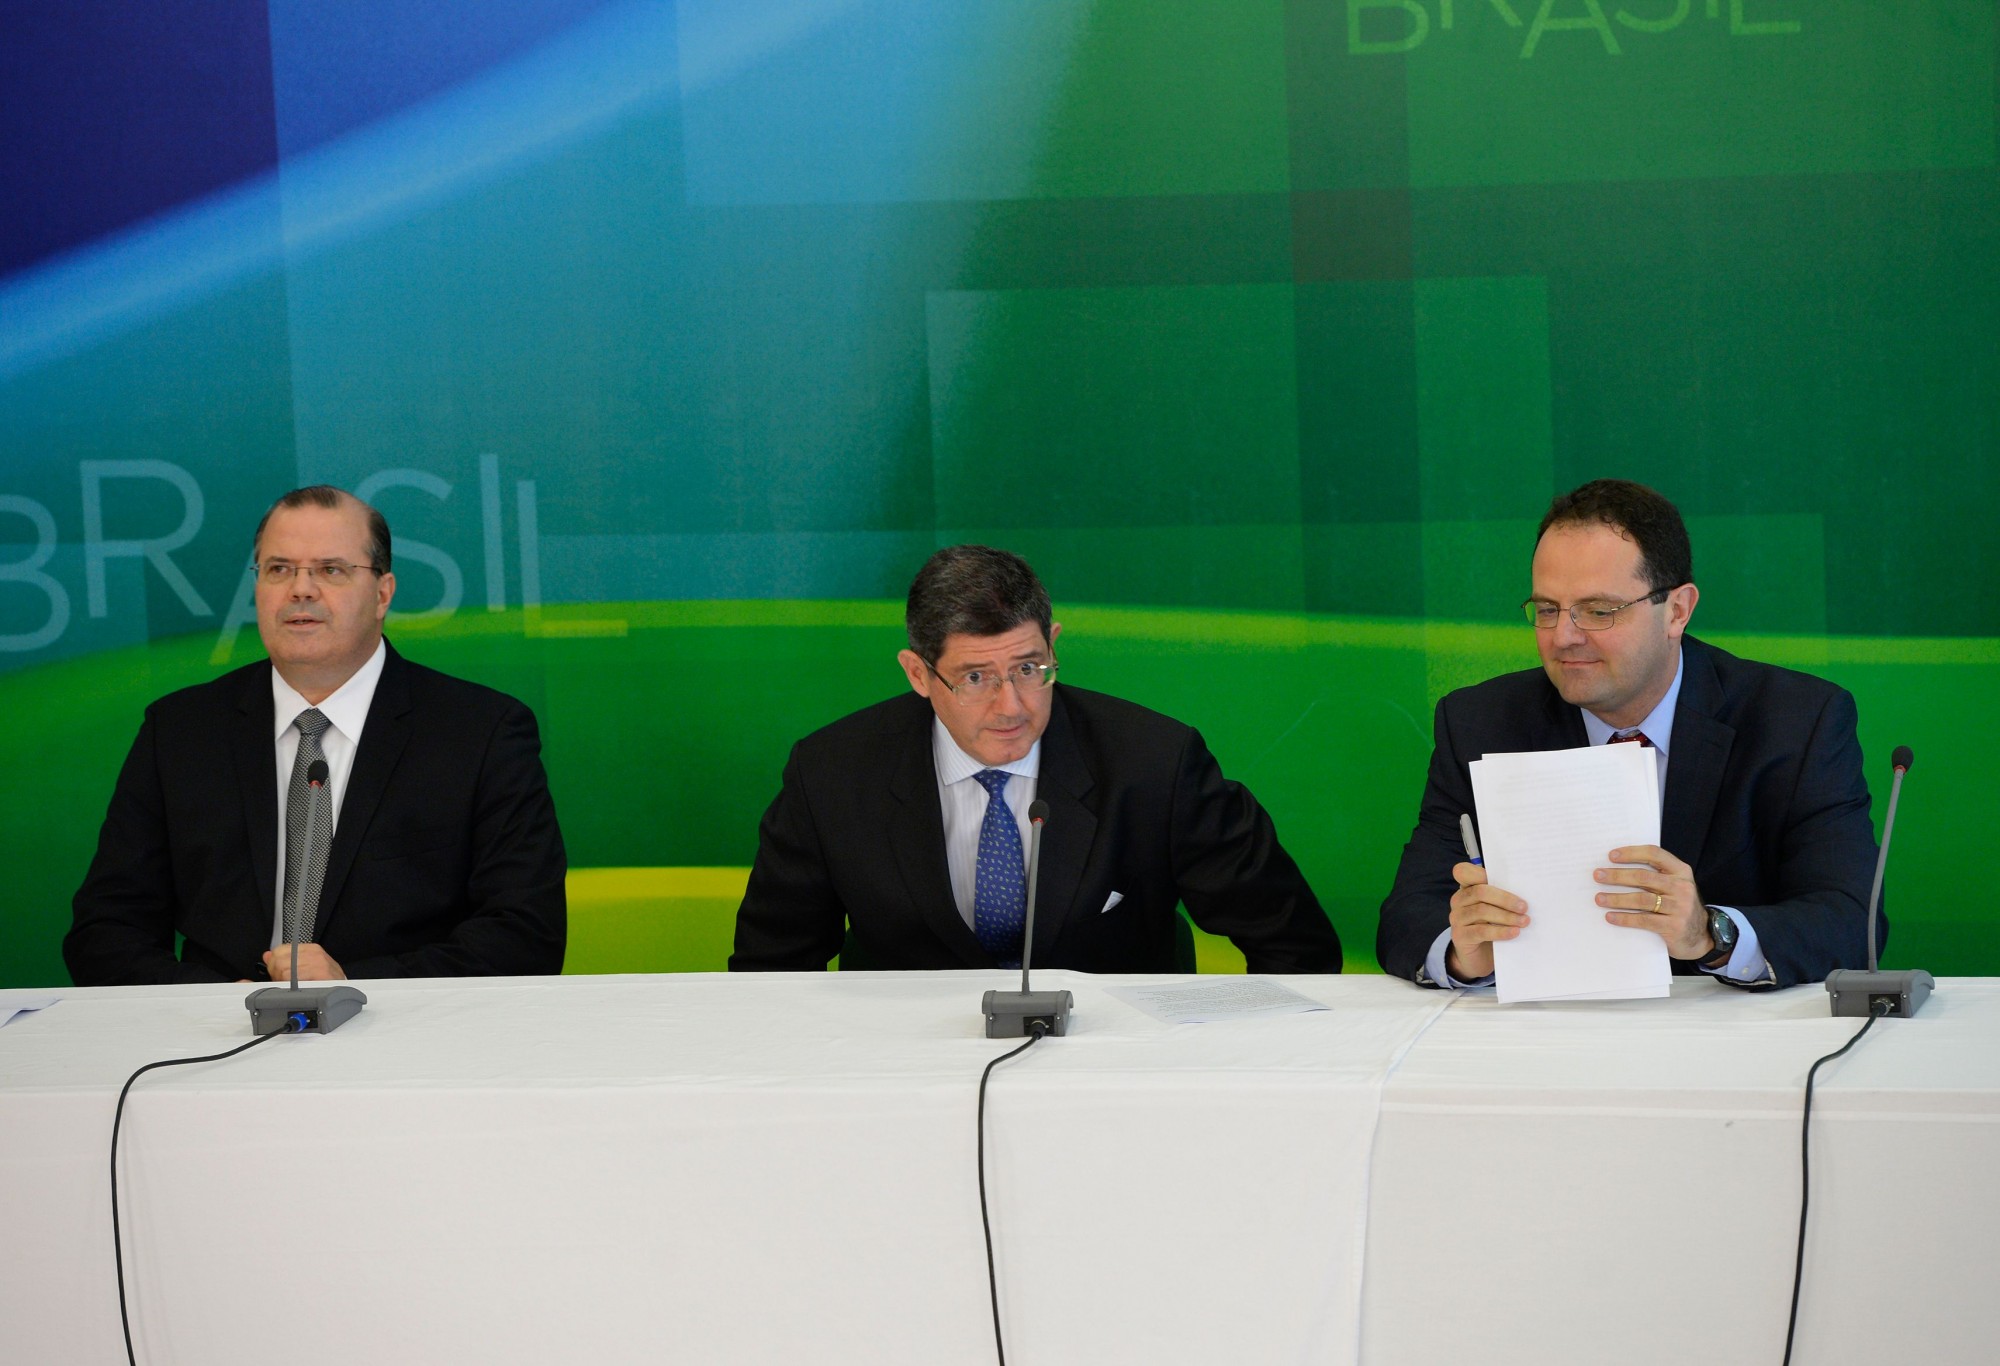 Brazil Announces New Finance Minister and Economic Team